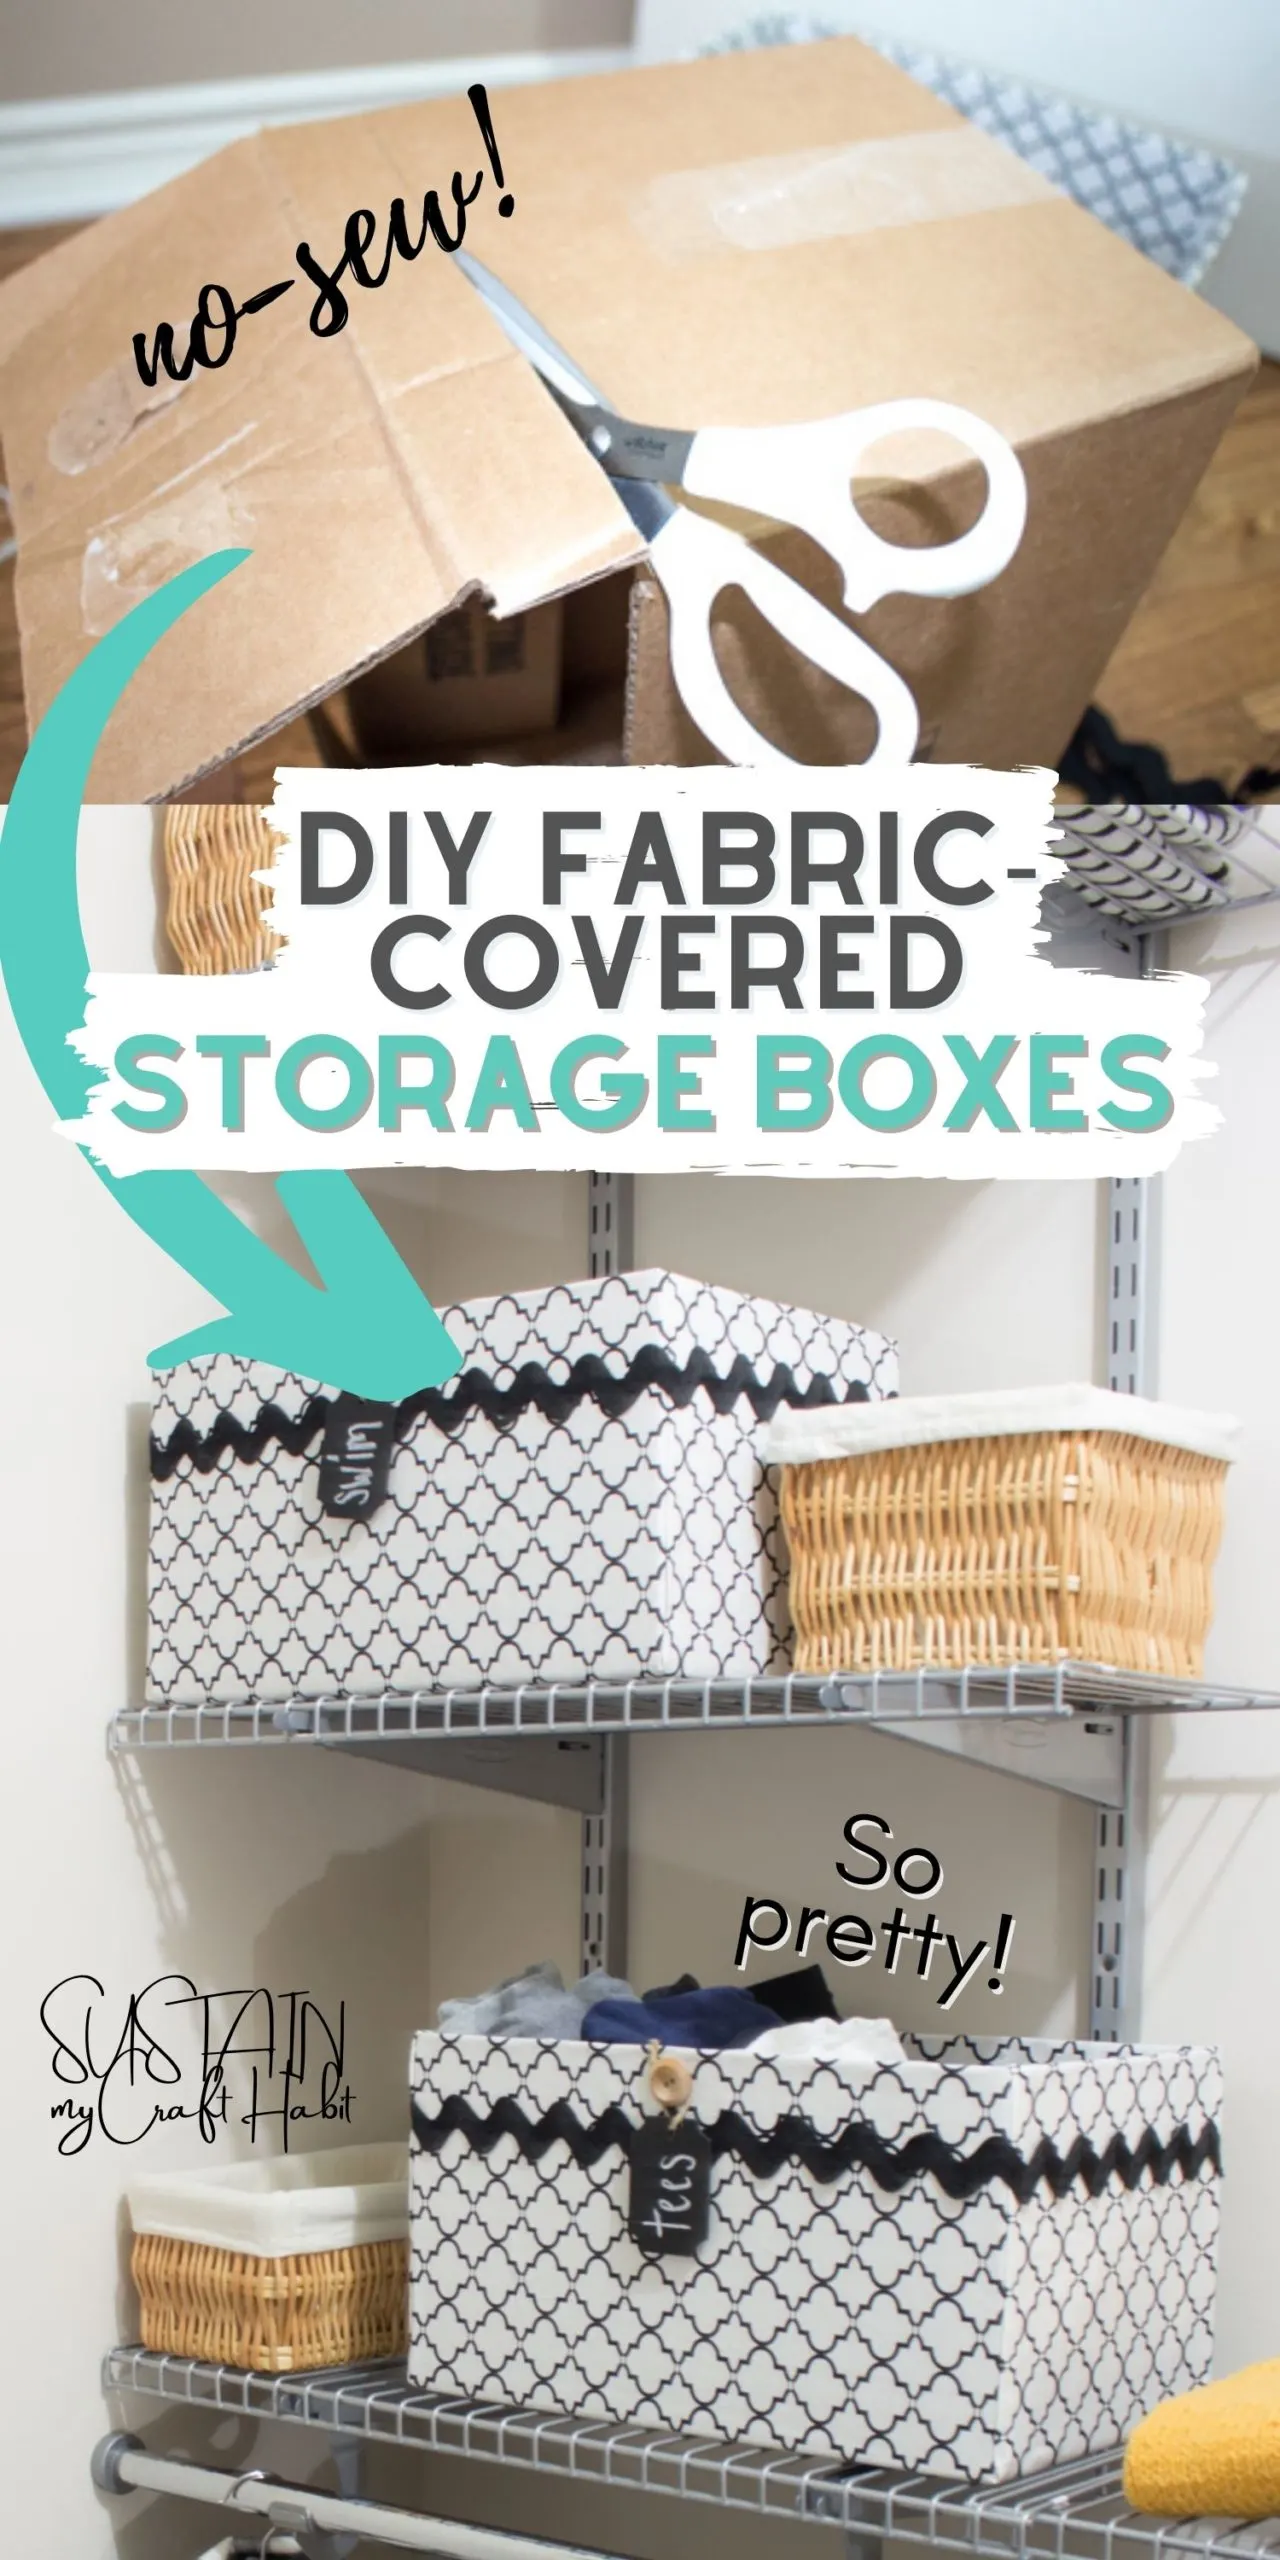 SOGA Beige Small Foldable Canvas Storage Box Cube Clothes Basket Organiser  Home Decorative Box - $62.28 🤩